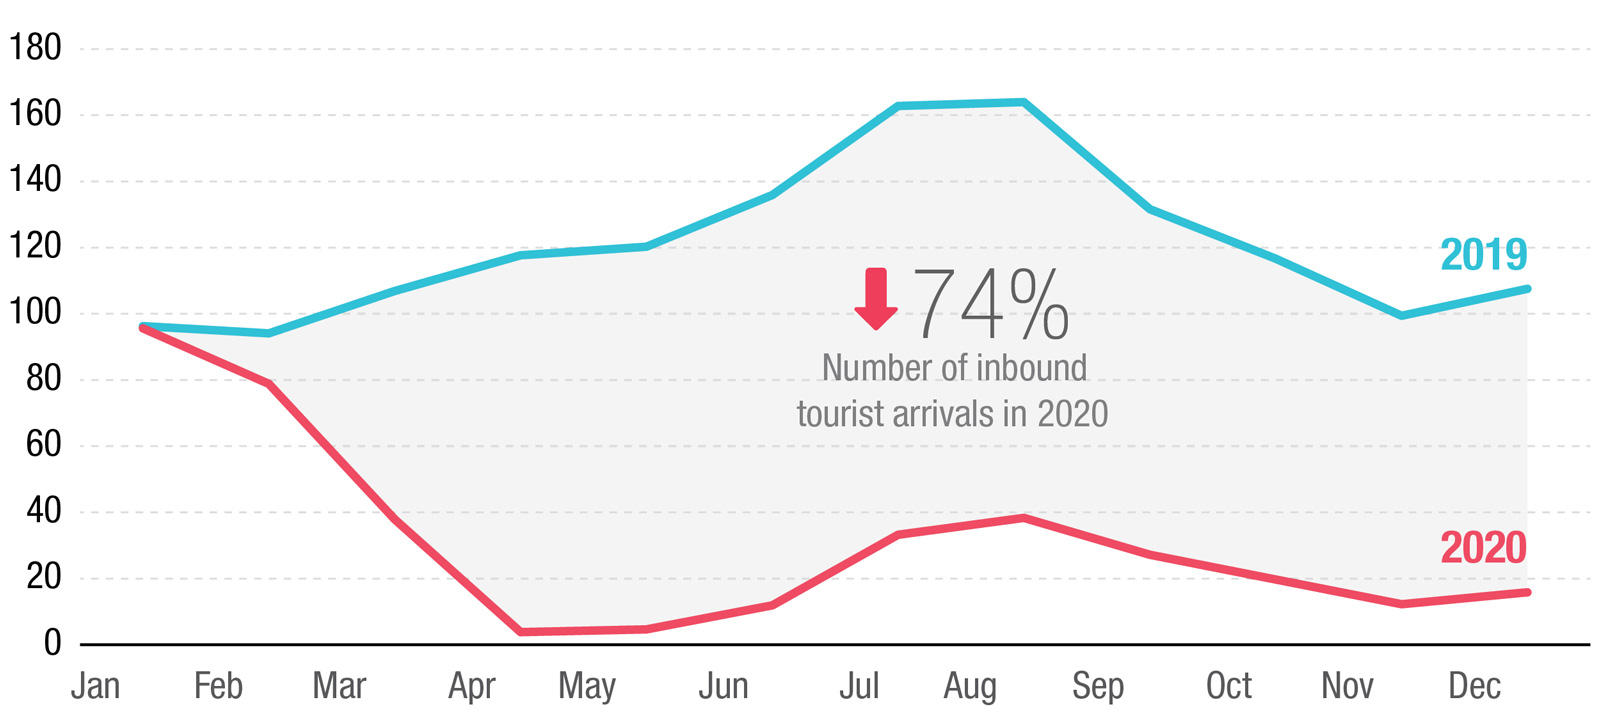 International tourist arrivals 2019 and 2020